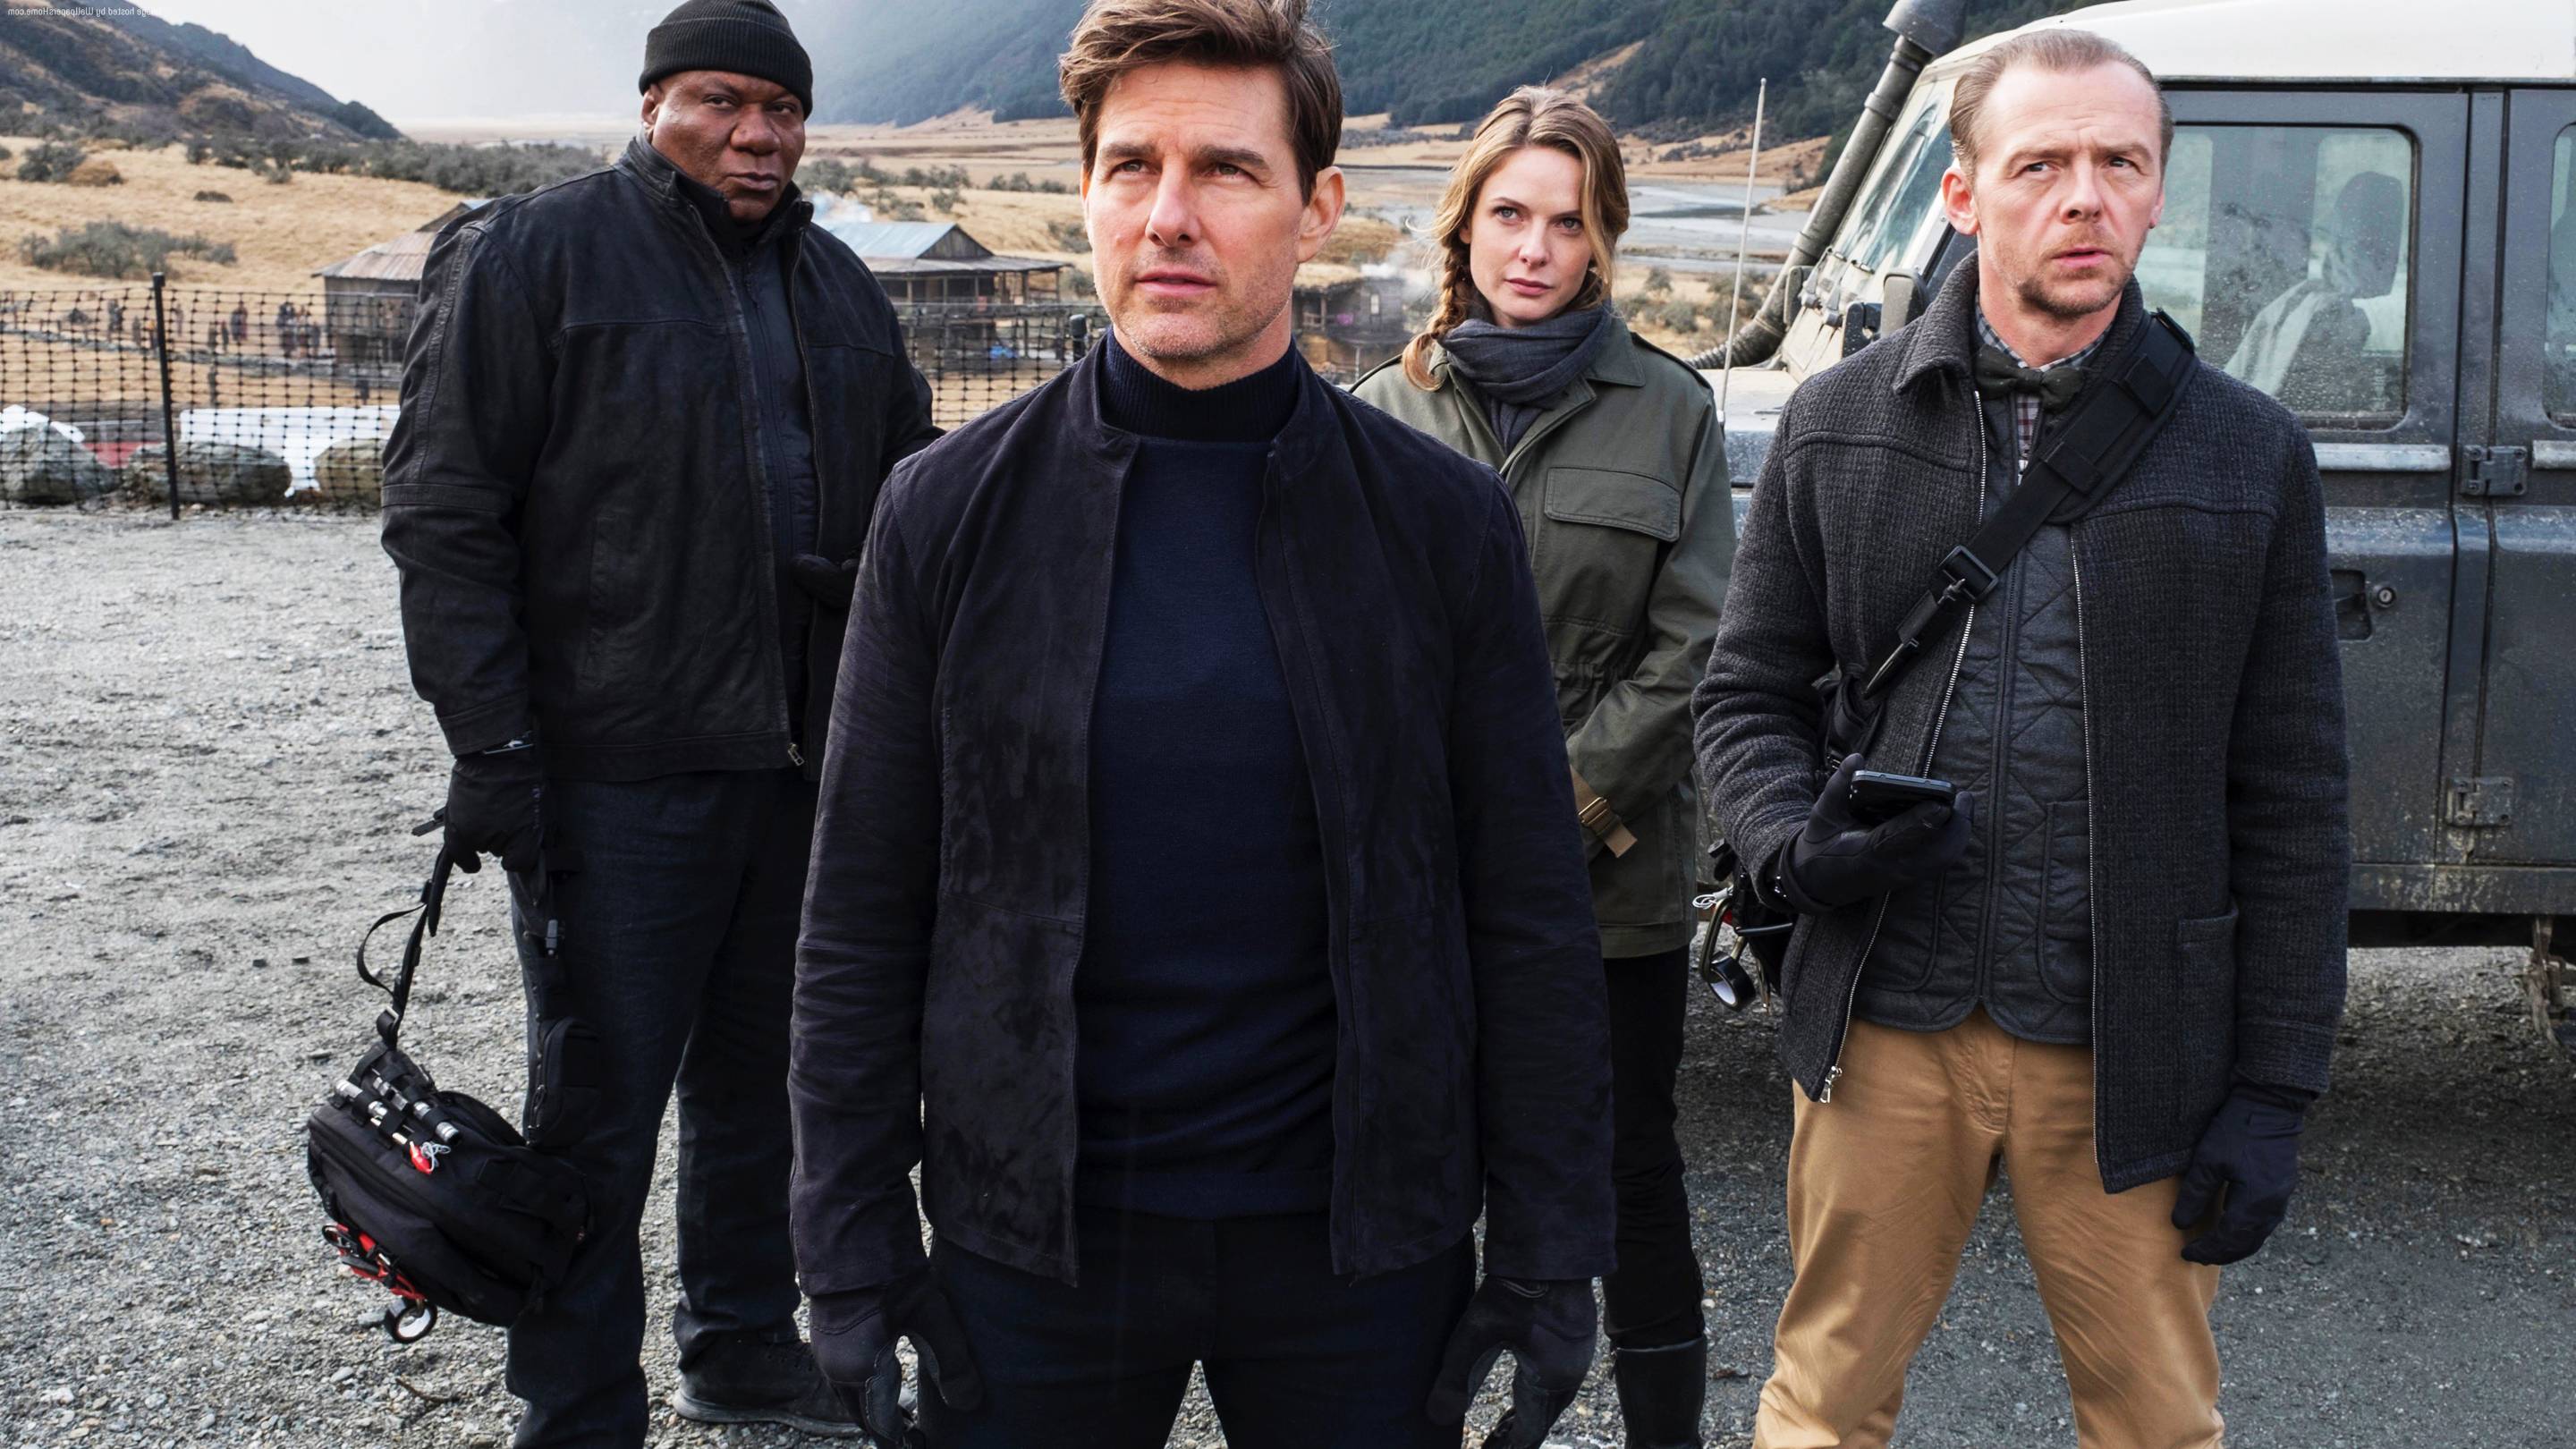 Tom Cruise Ving Rhames Rebecca Mission Impossible 6 HD Wallpaper